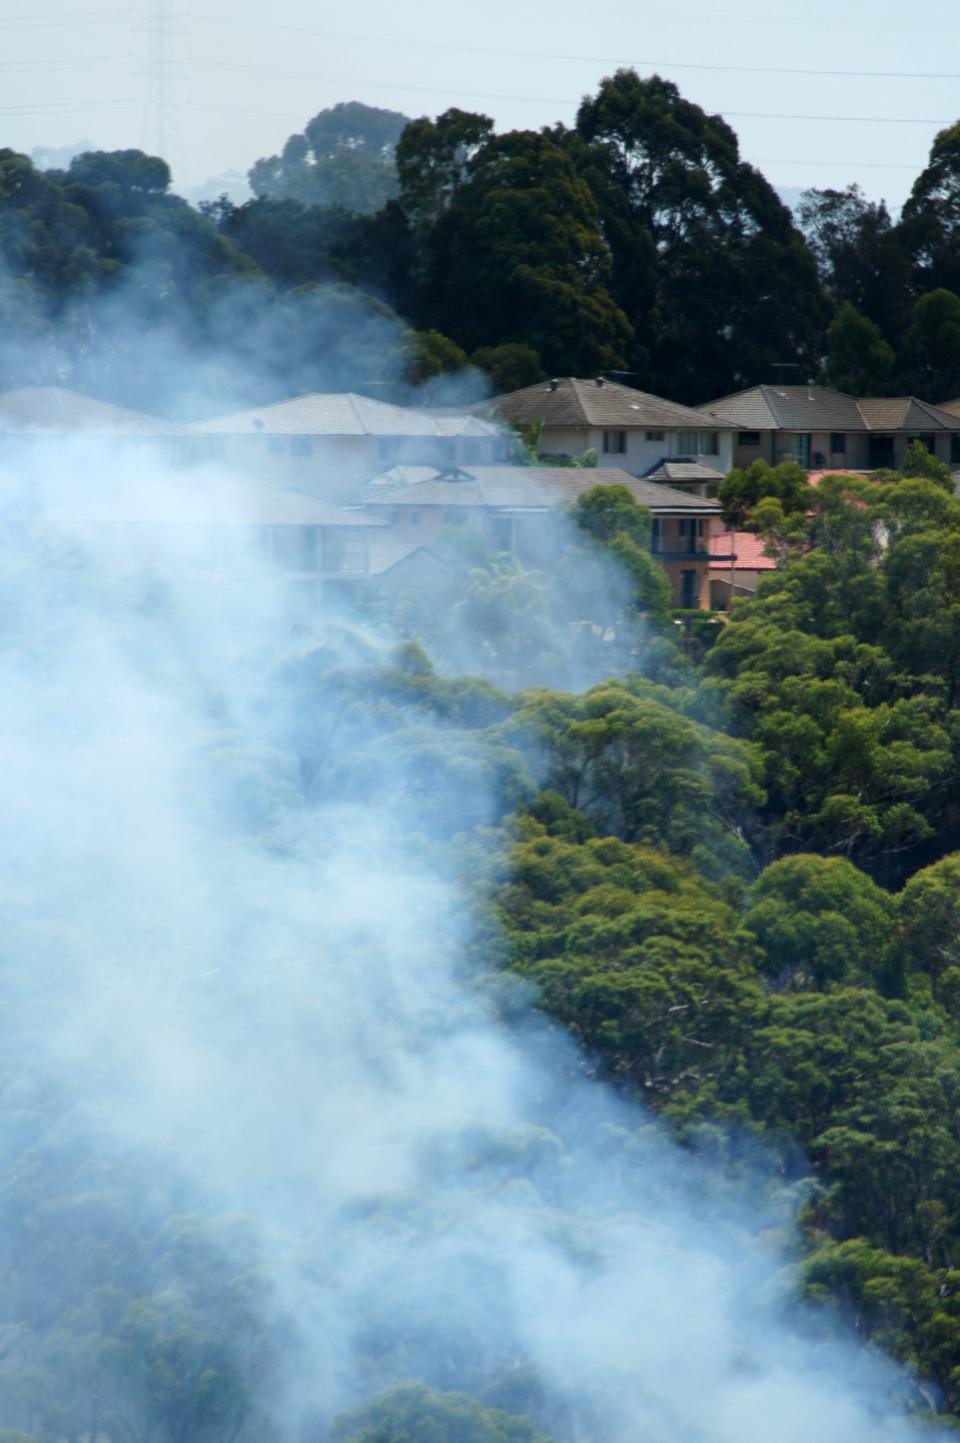 Belrose burn. Photo: Anthony Clark NSW RFS.